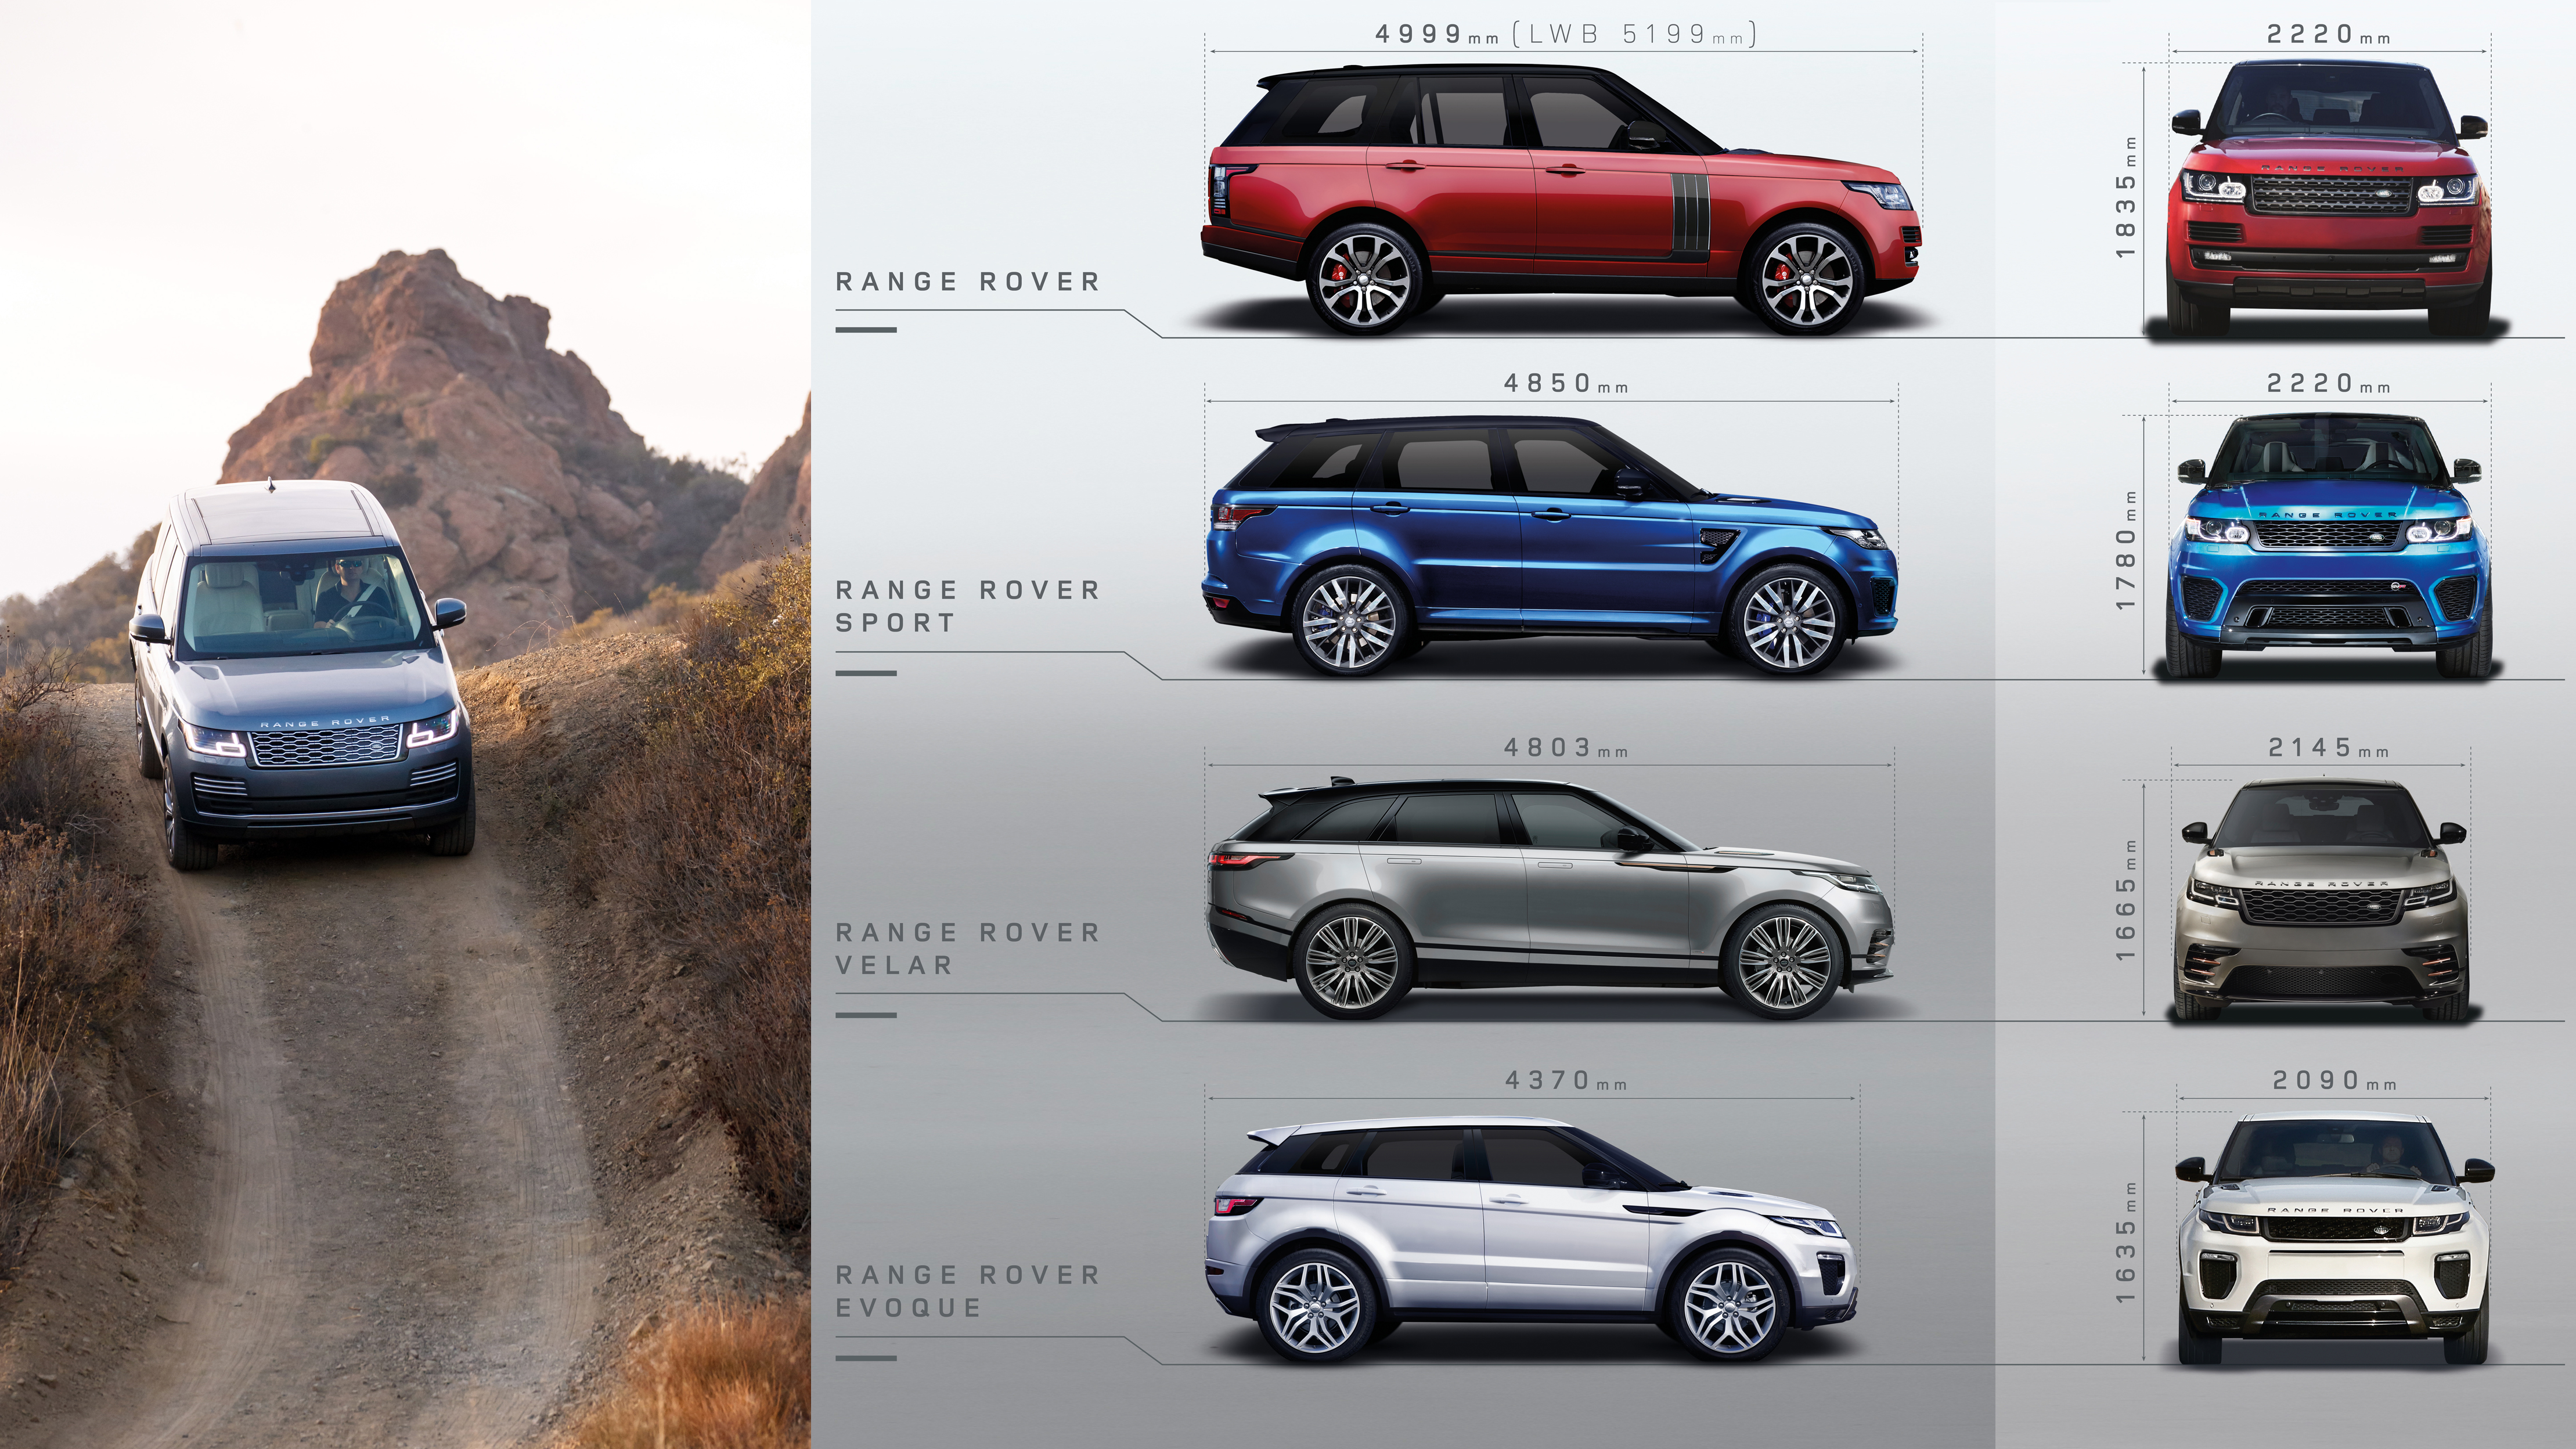 Размер рендж ровер спорт. Land Rover range Rover Sport габариты. Range Rover Sport 2017 габариты. Range Rover Sport 2014 габариты. Land Rover range Rover Evoque габариты.